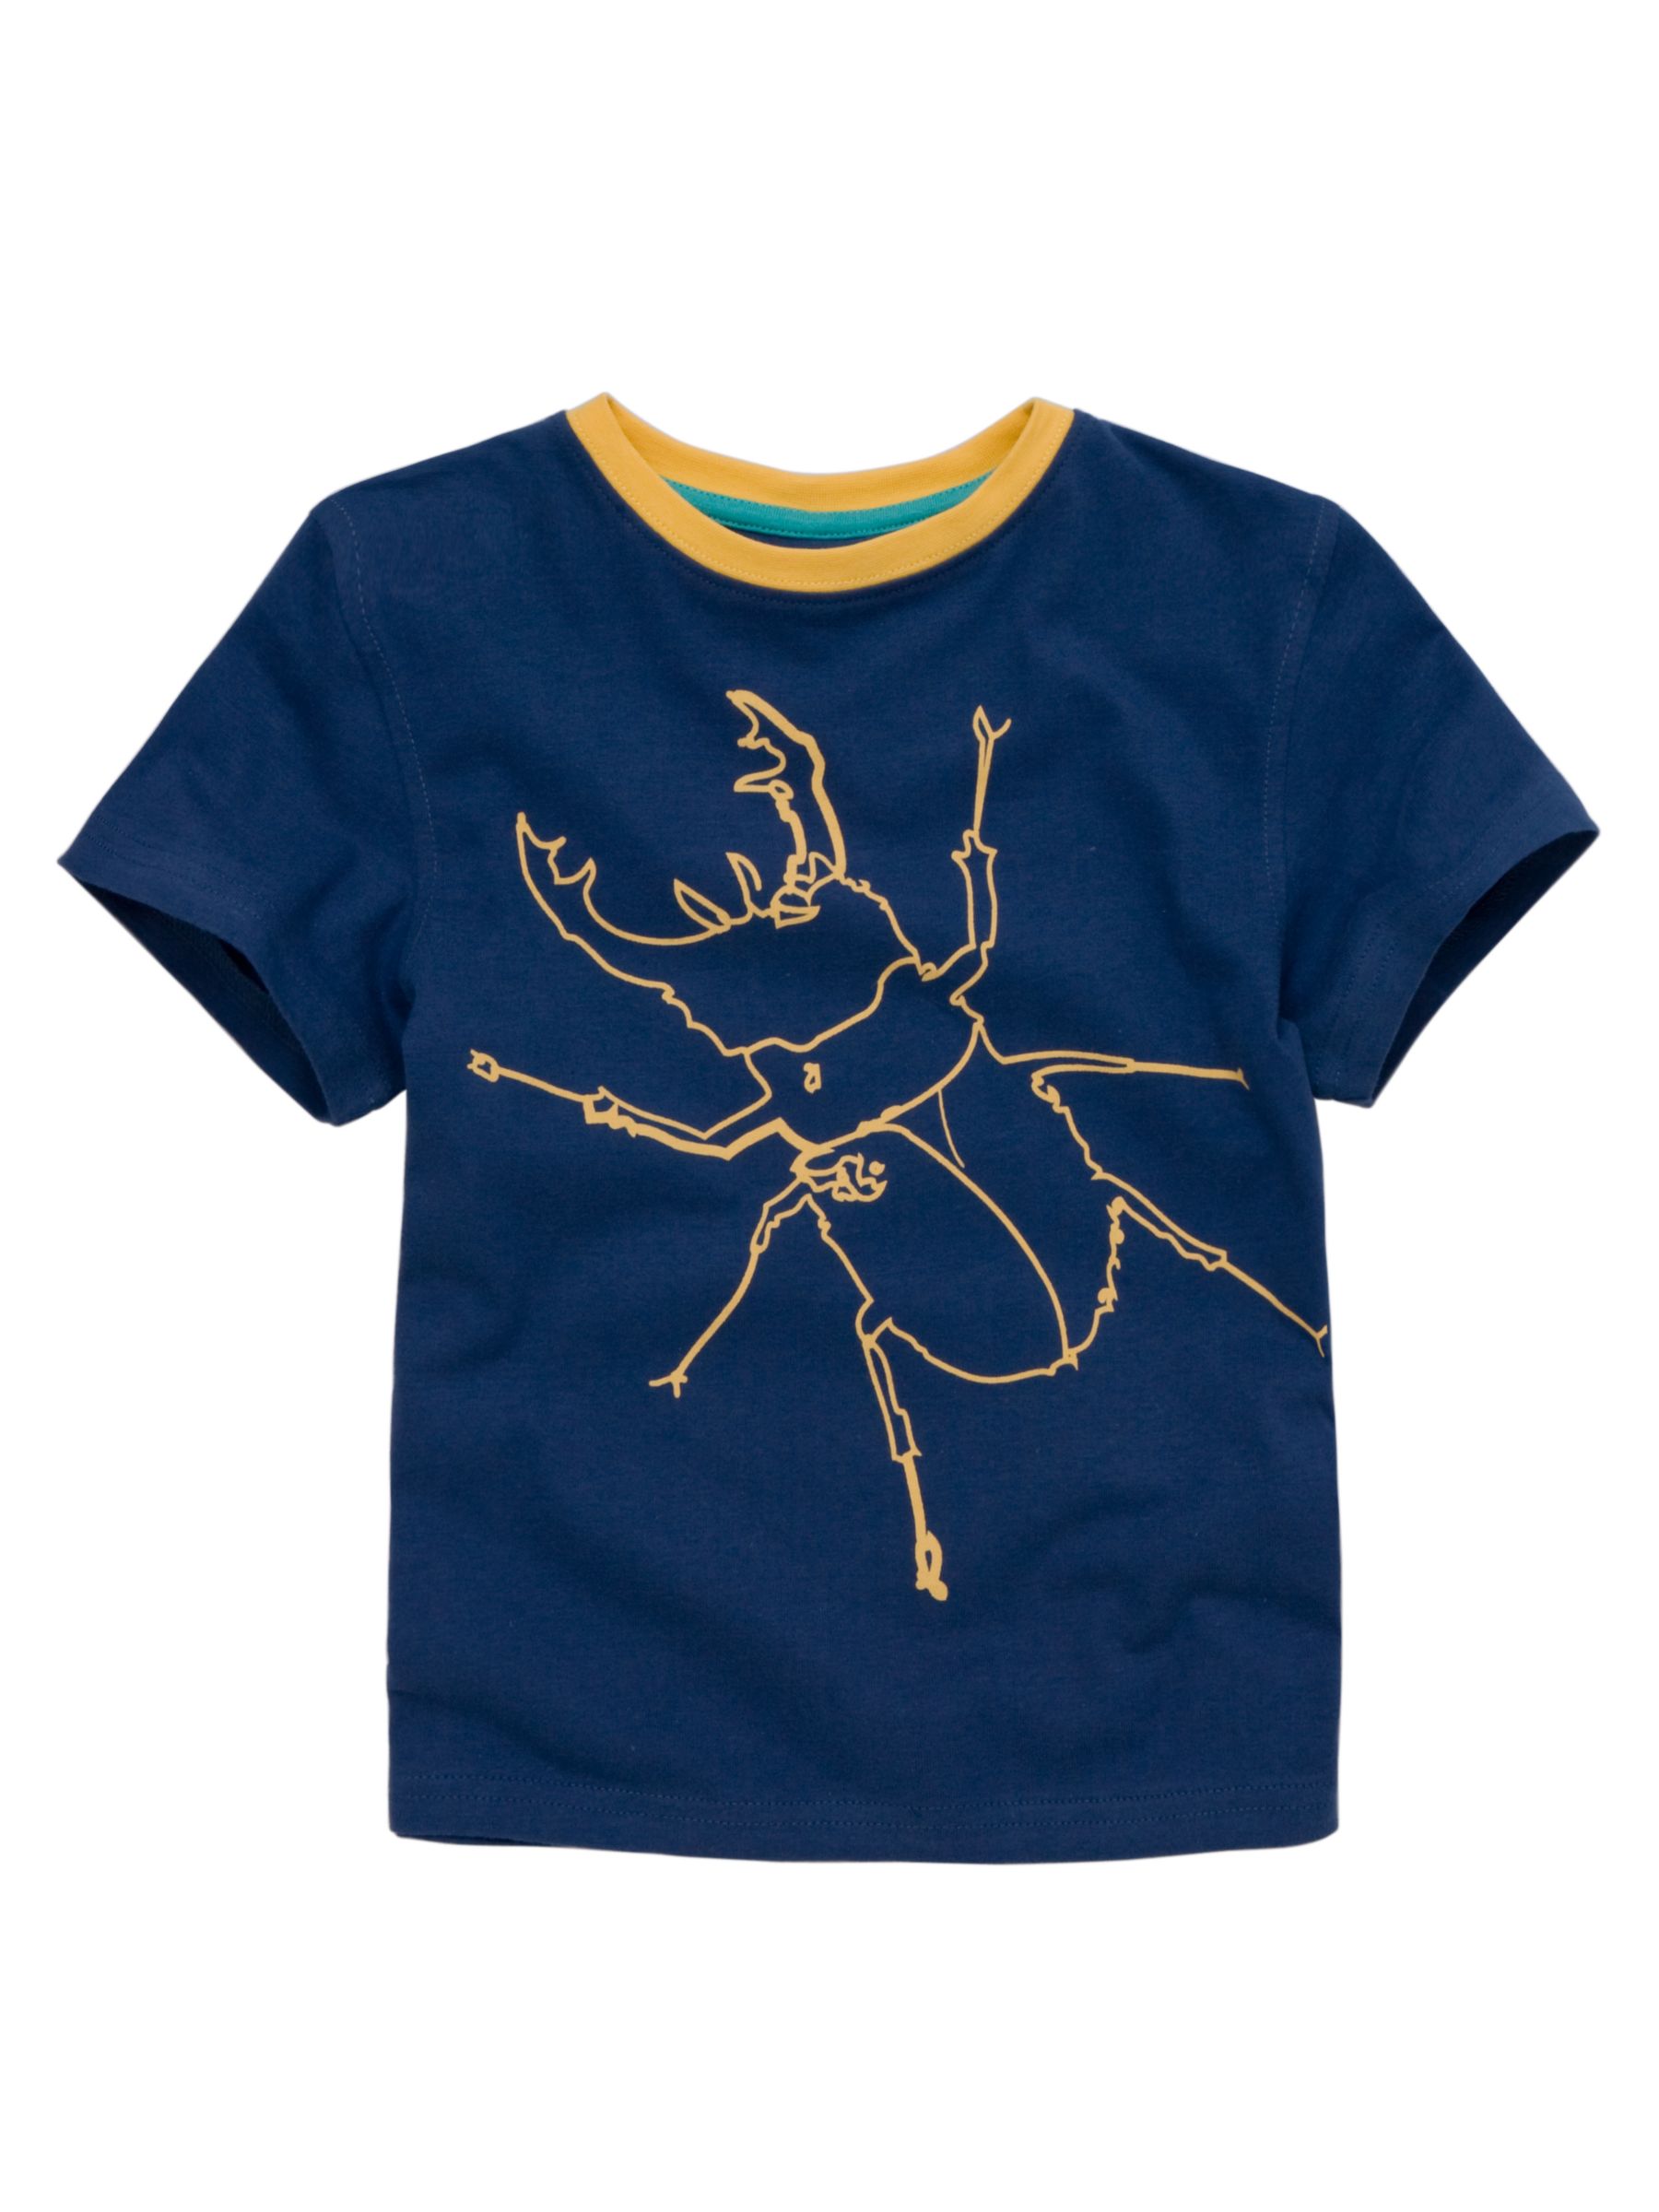 John Lewis Boy Beetle T-Shirt, Navy blue, 5 years